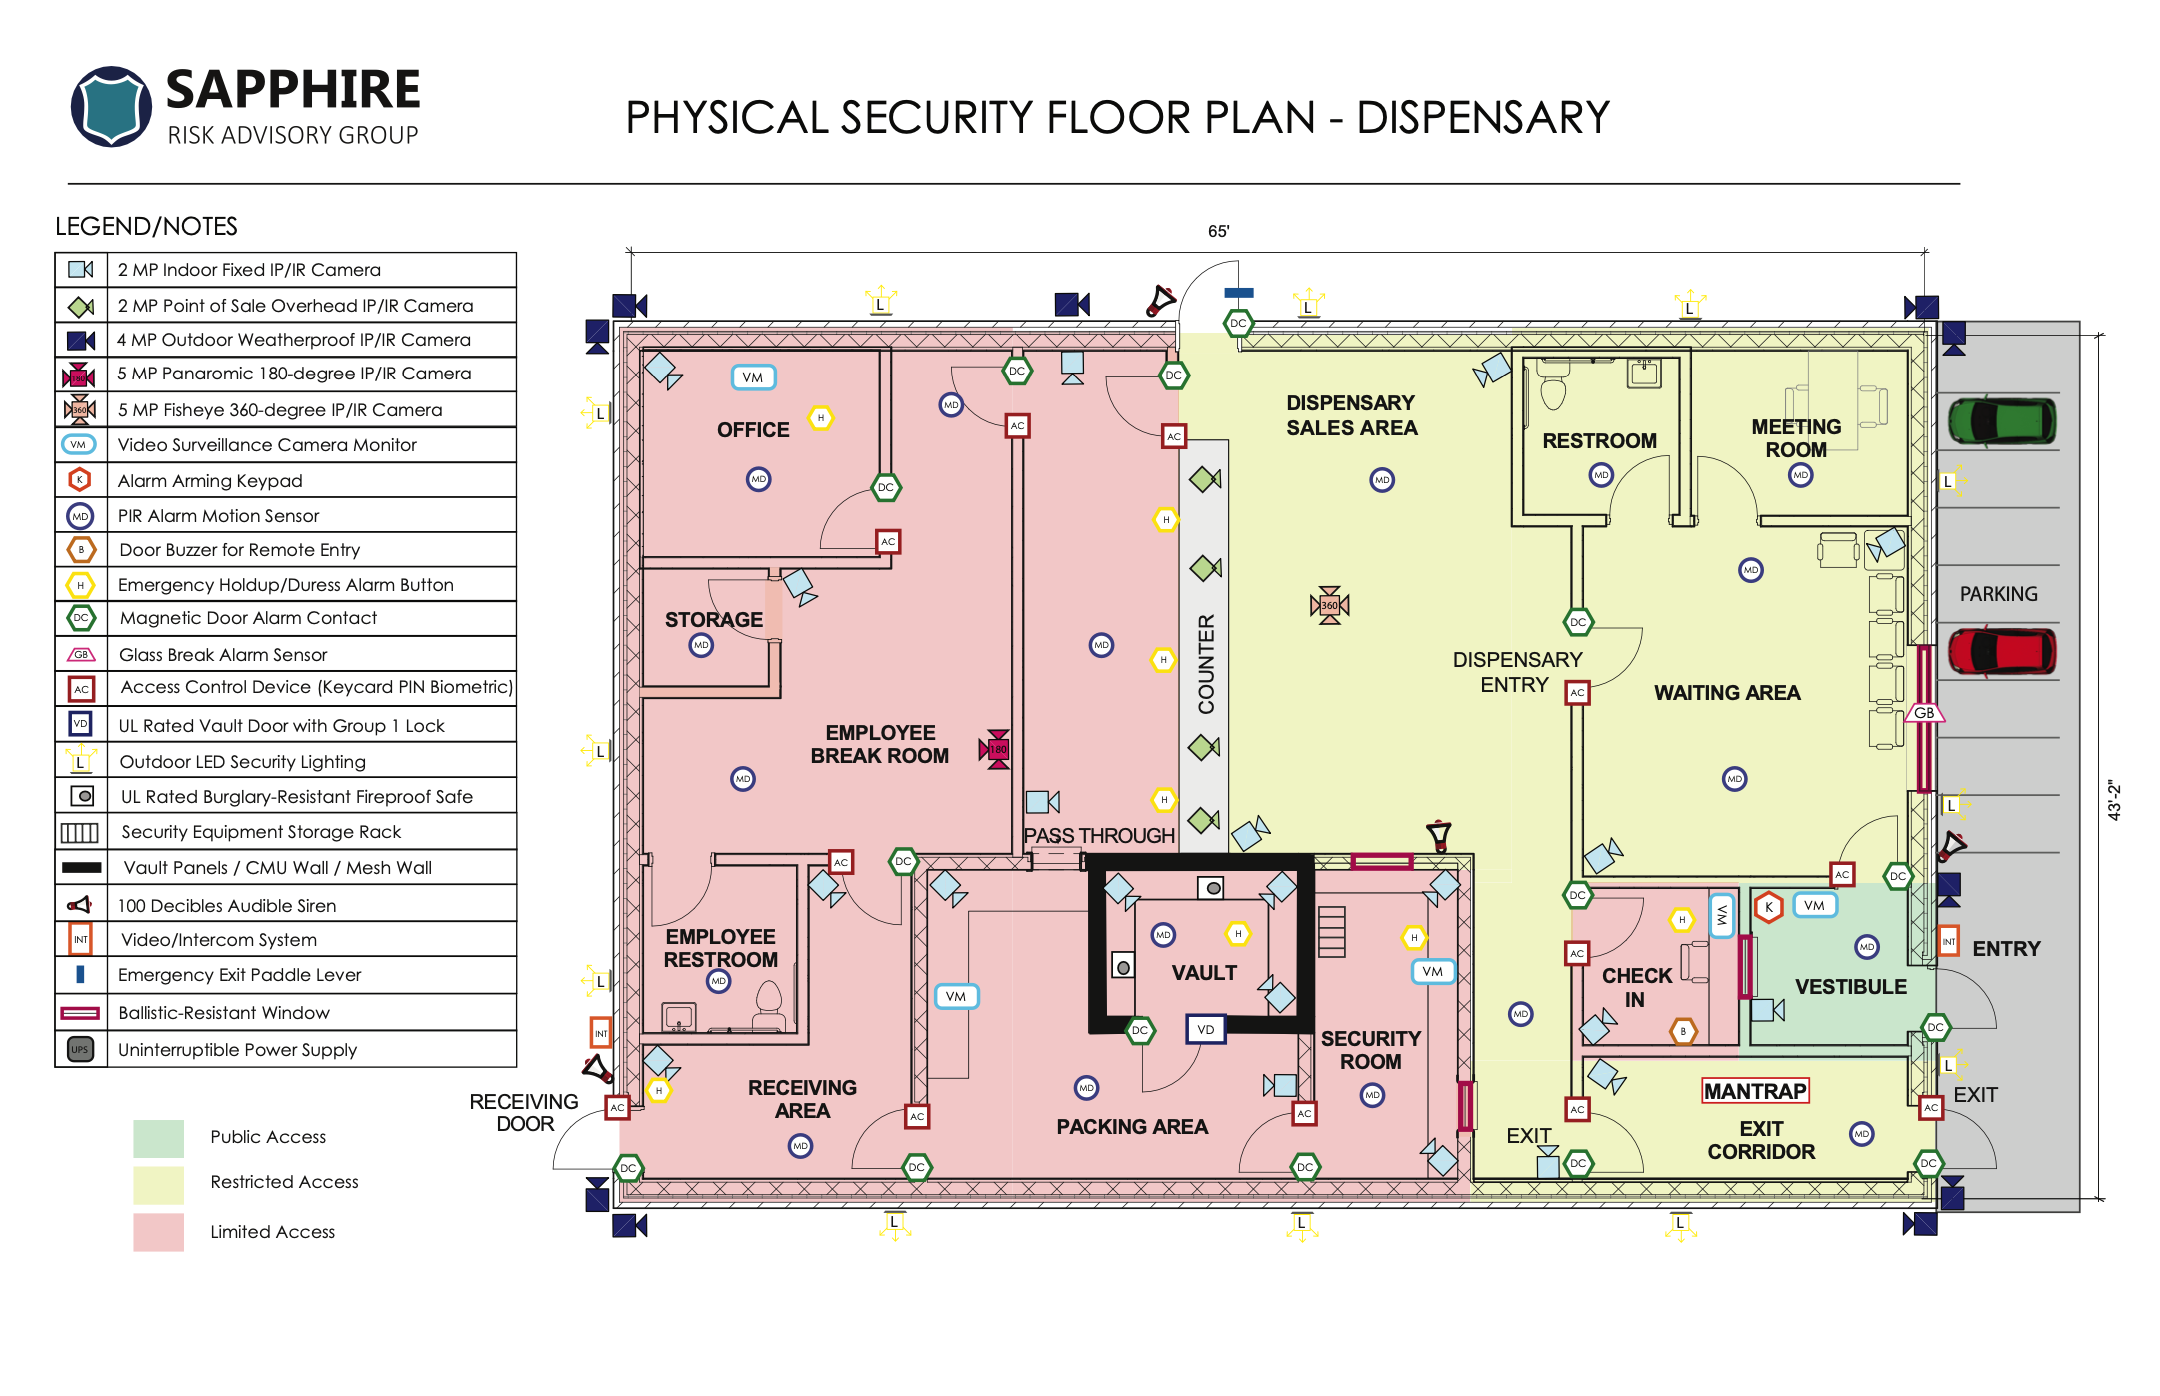 Physical Security Floor Plan Design - Dispensary/Retail